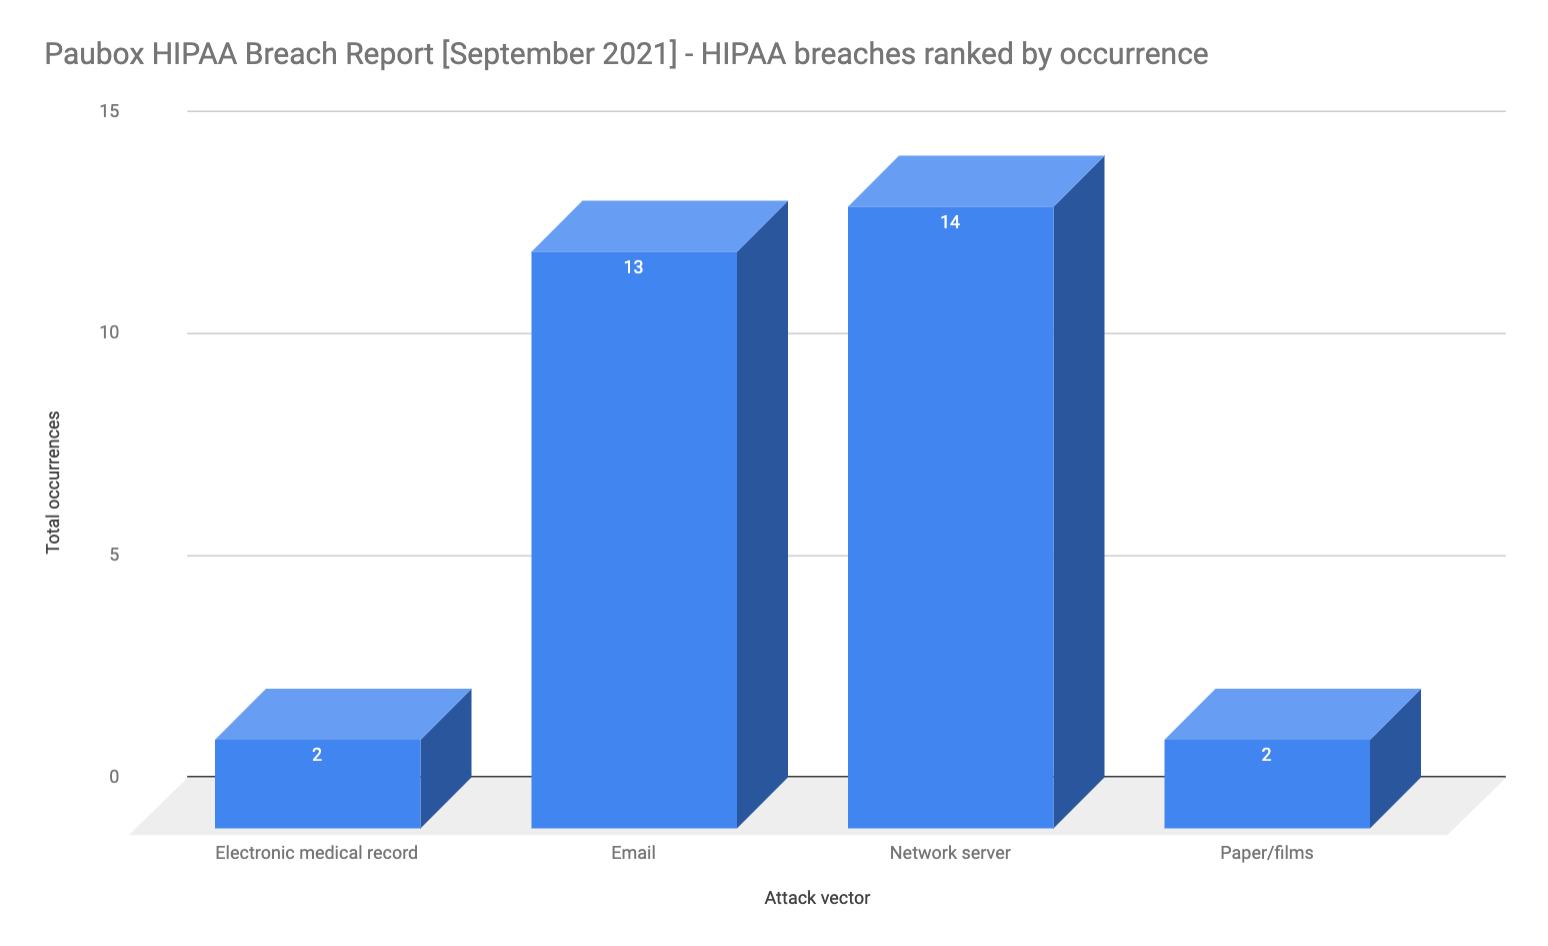 HIPAA Breach Report for September 2021